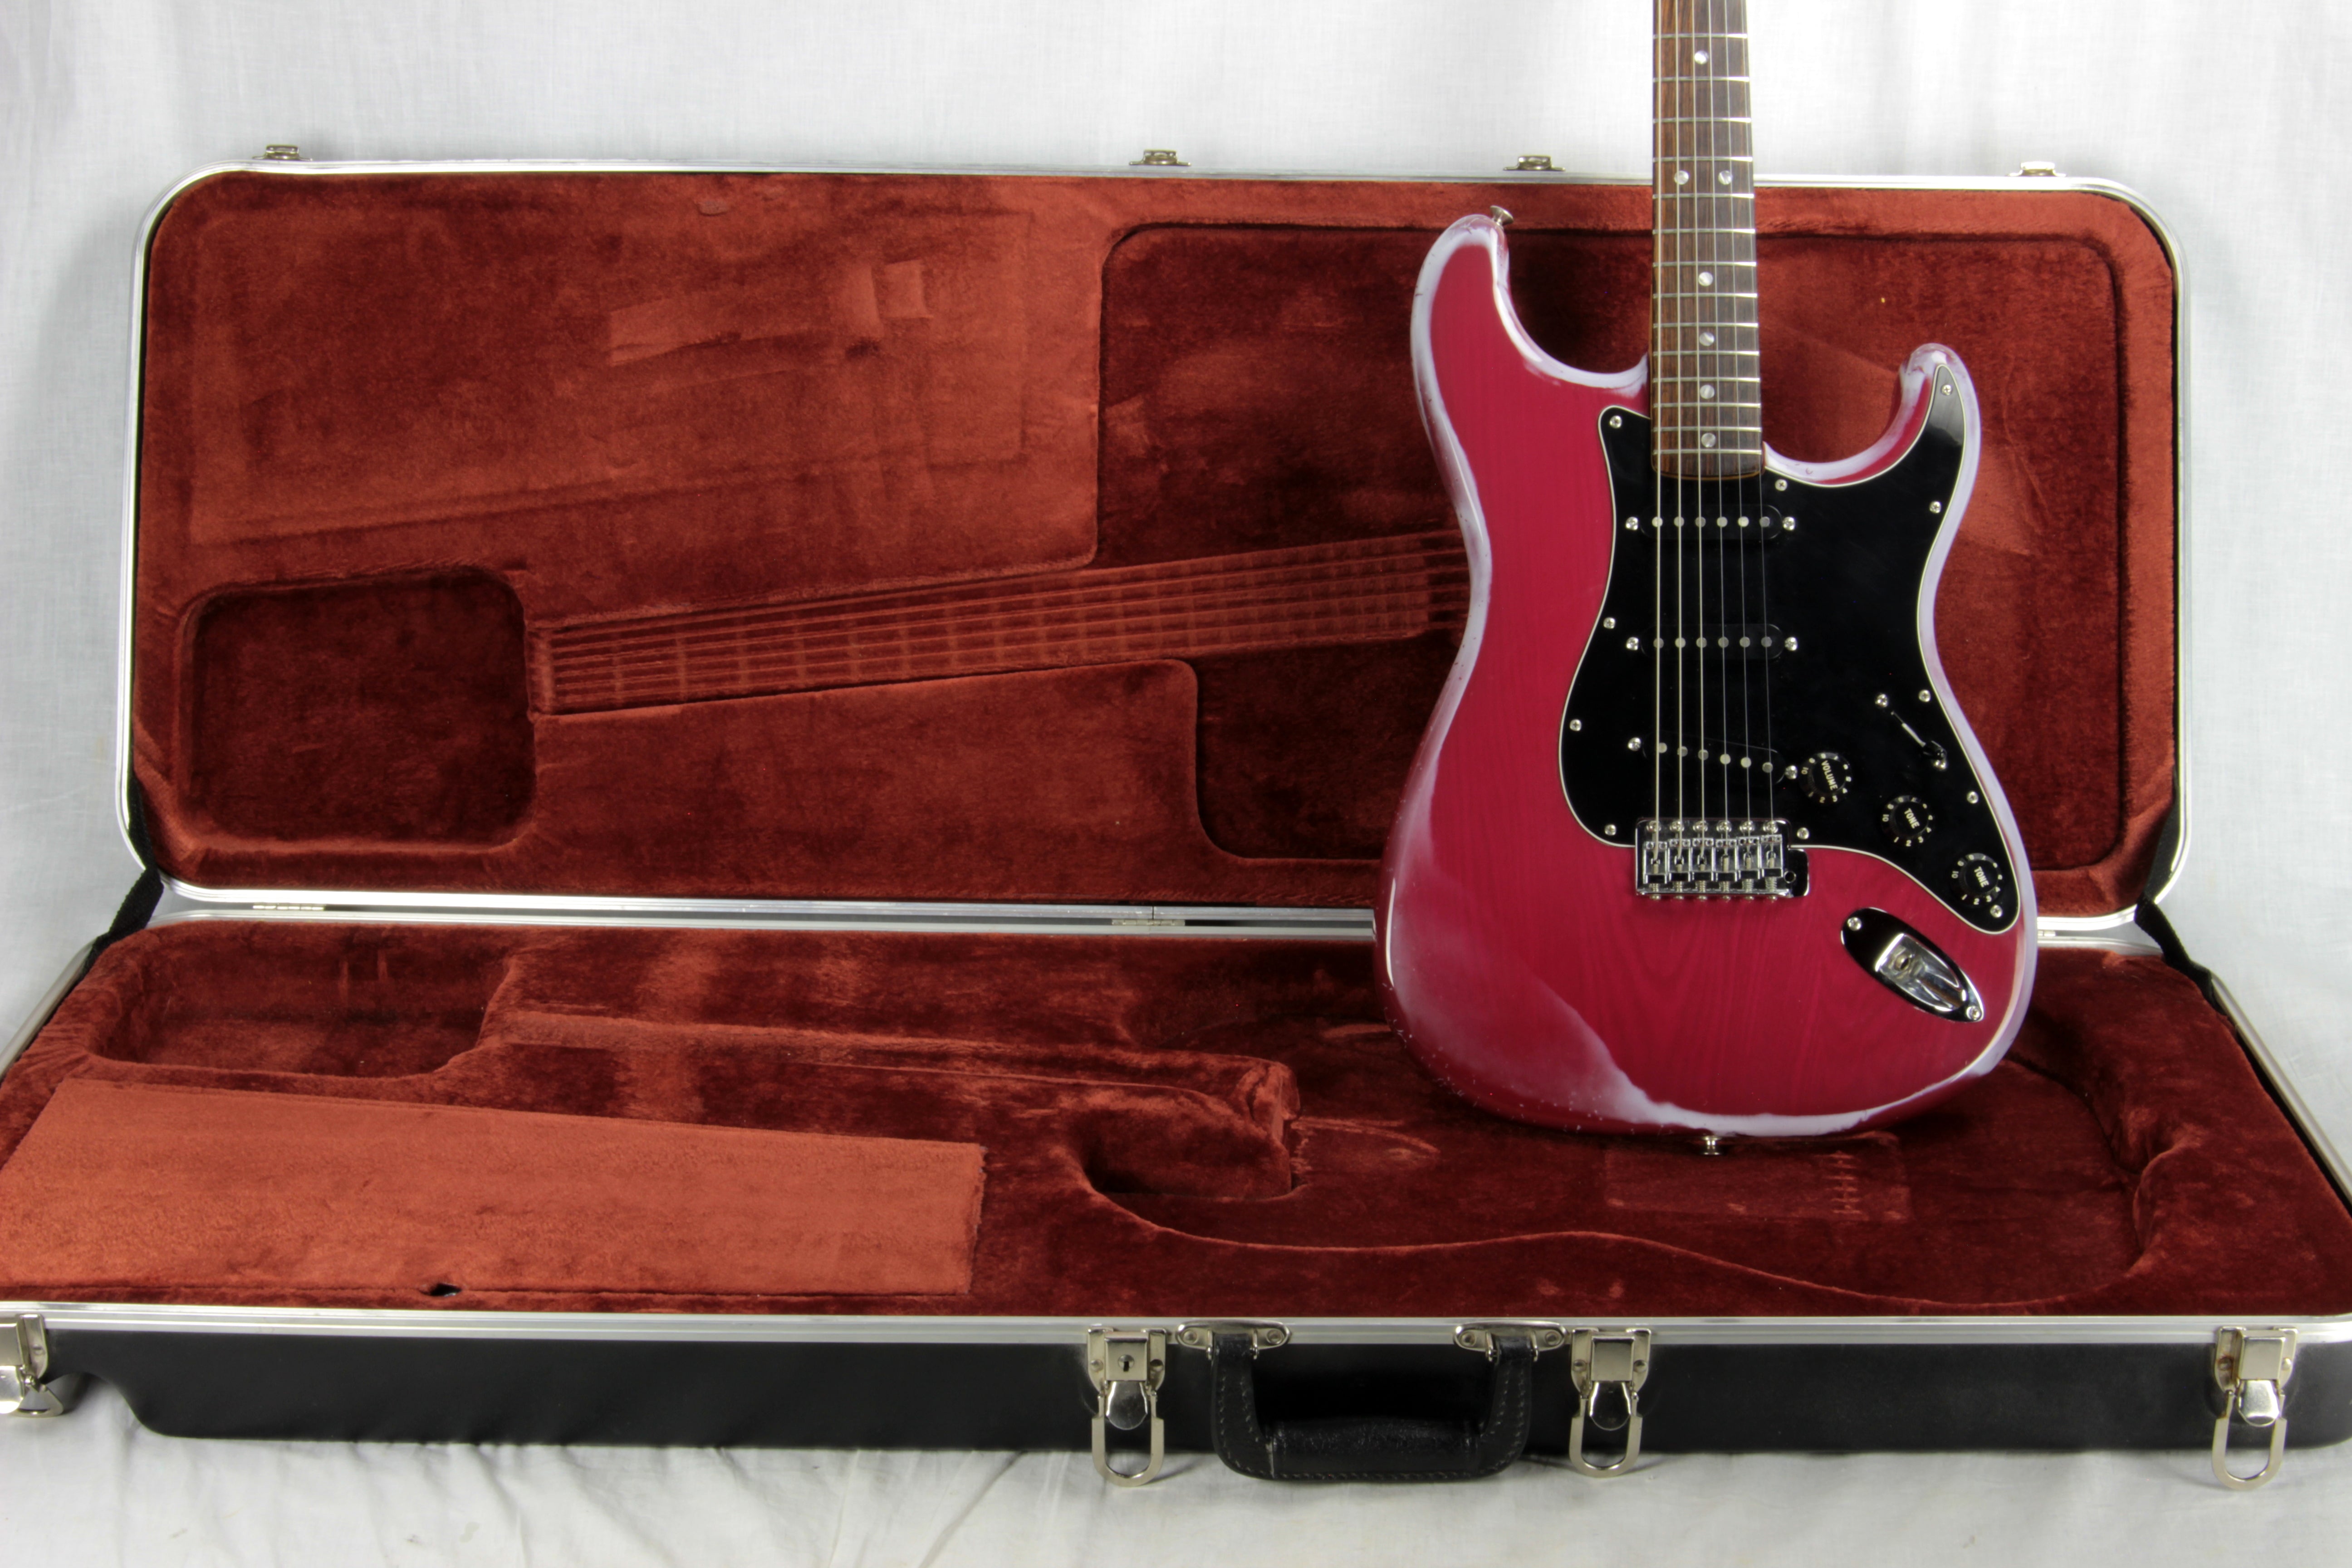 *SOLD*  1979-1980 Fender Stratocaster Trans Wine Red w/ Original Case! Rosewood neck Strat